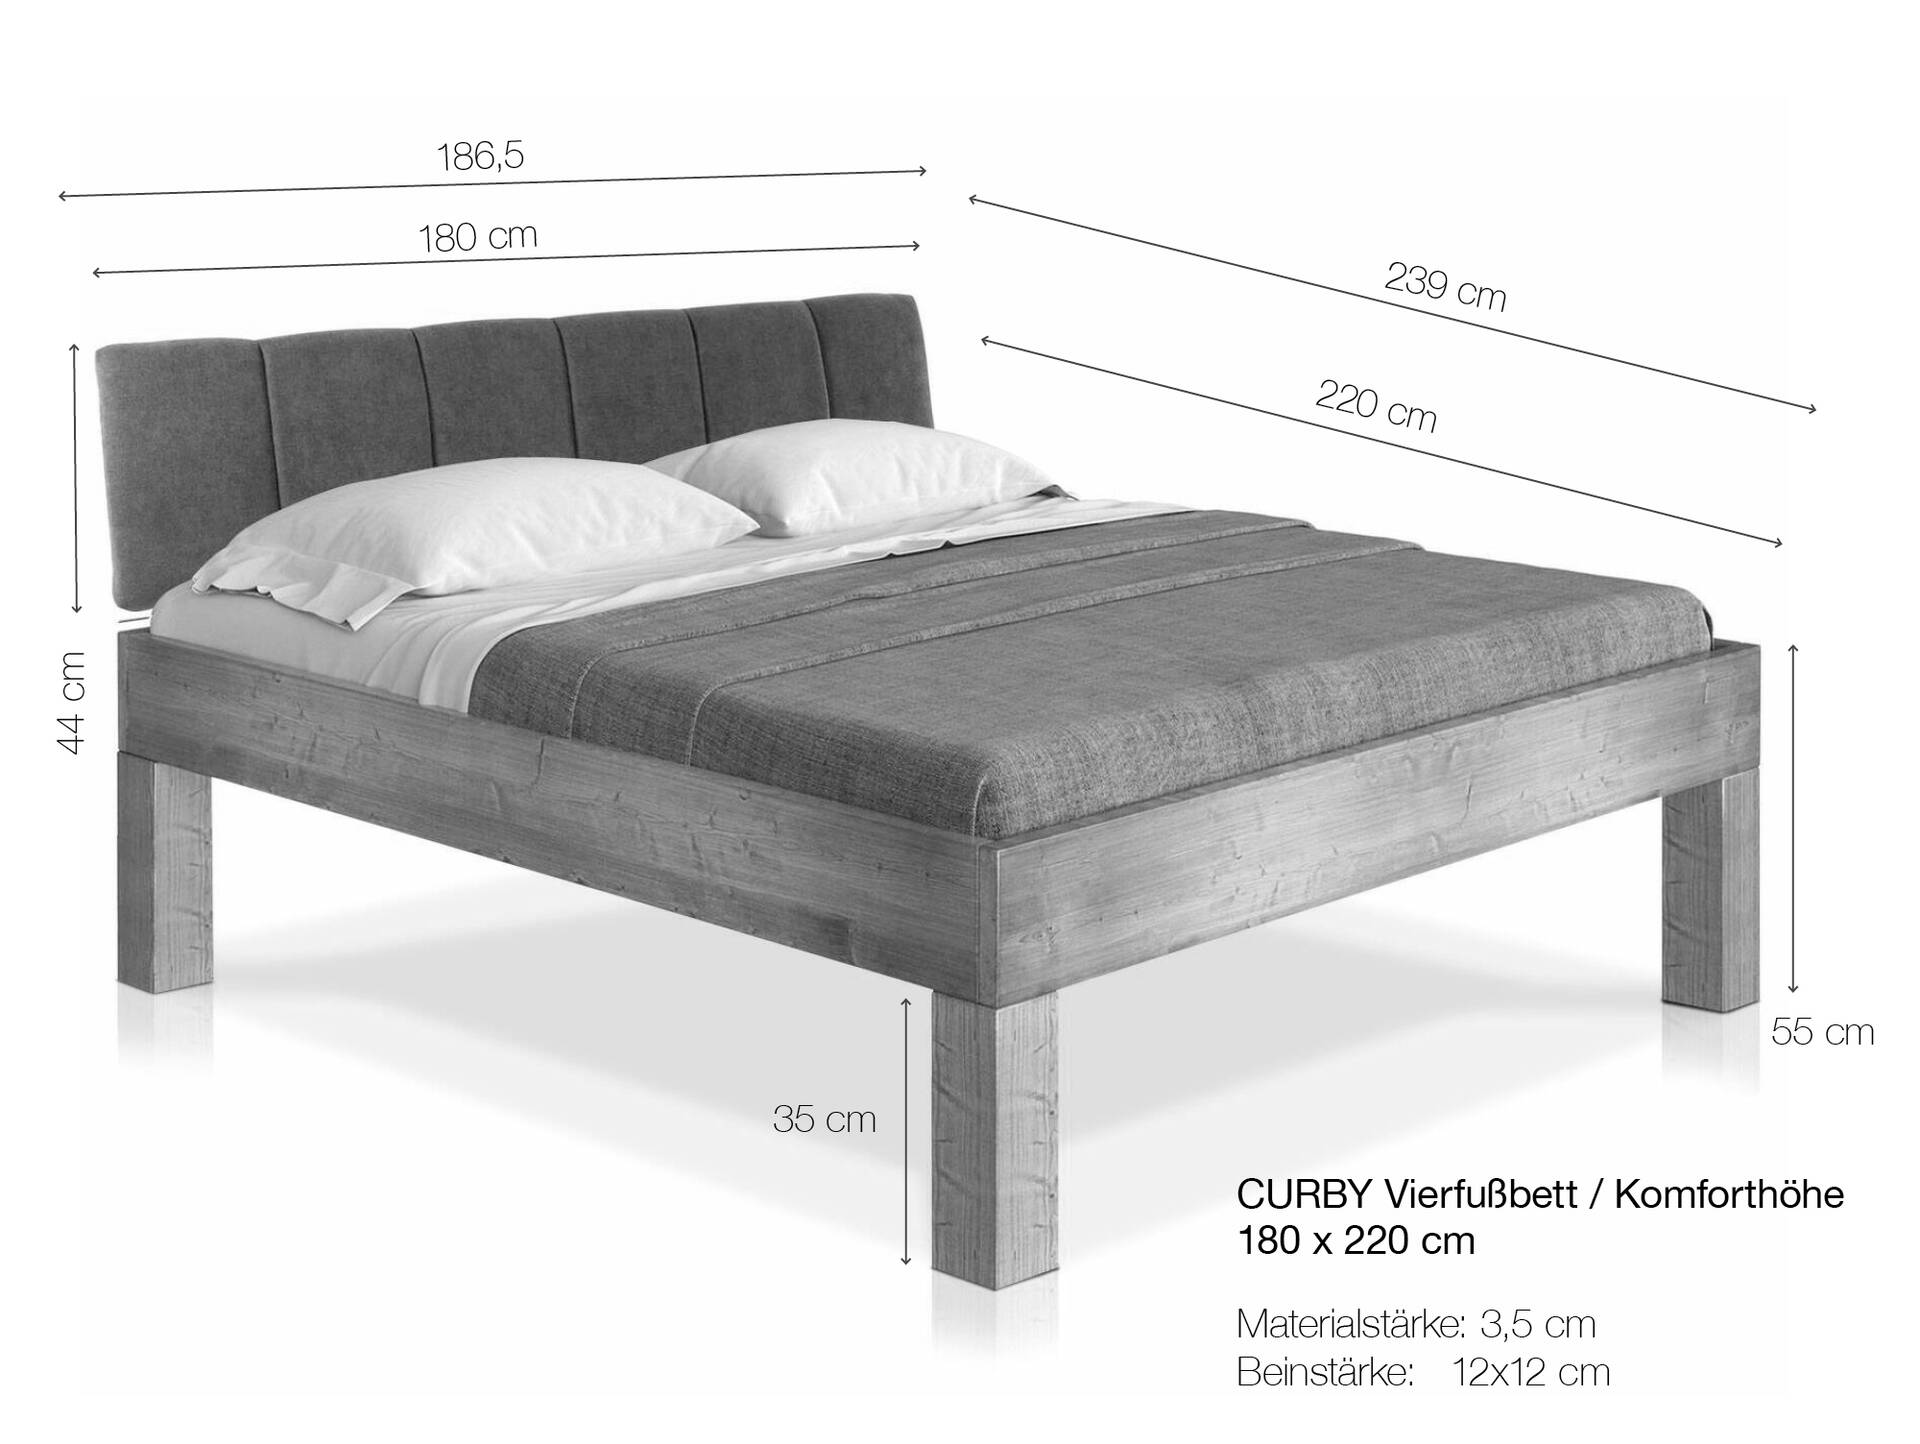 CURBY 4-Fuß-Bett mit Polster-Kopfteil, Material Massivholz, rustikale Altholzoptik, Fichte 180 x 220 cm | natur | Stoff Anthrazit mit Steppung | Komforthöhe